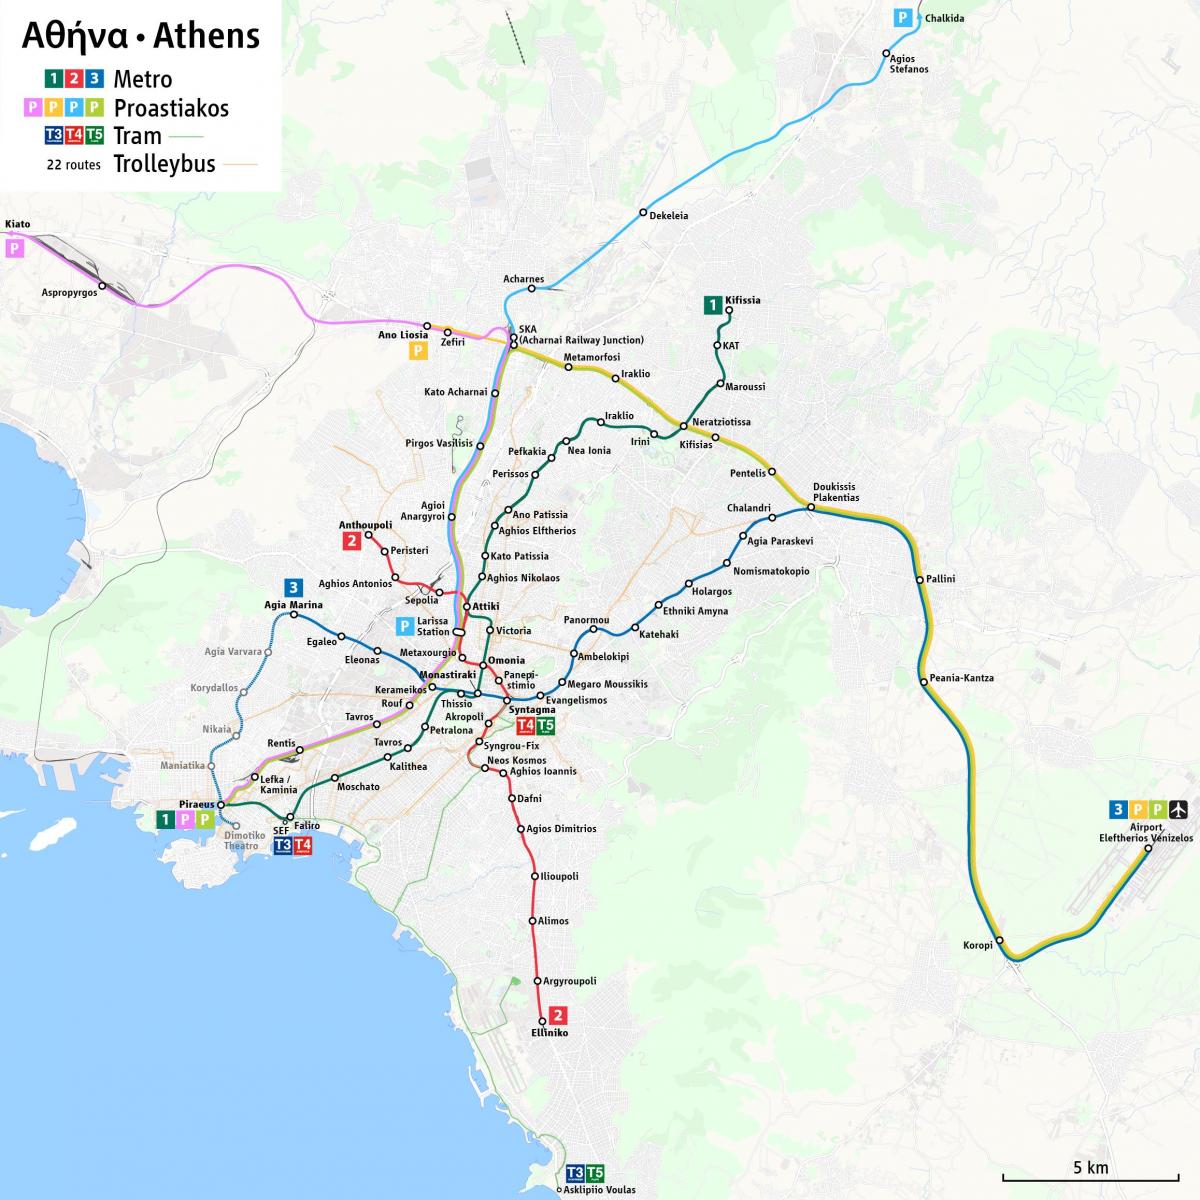 Athene spoorweg-kaart